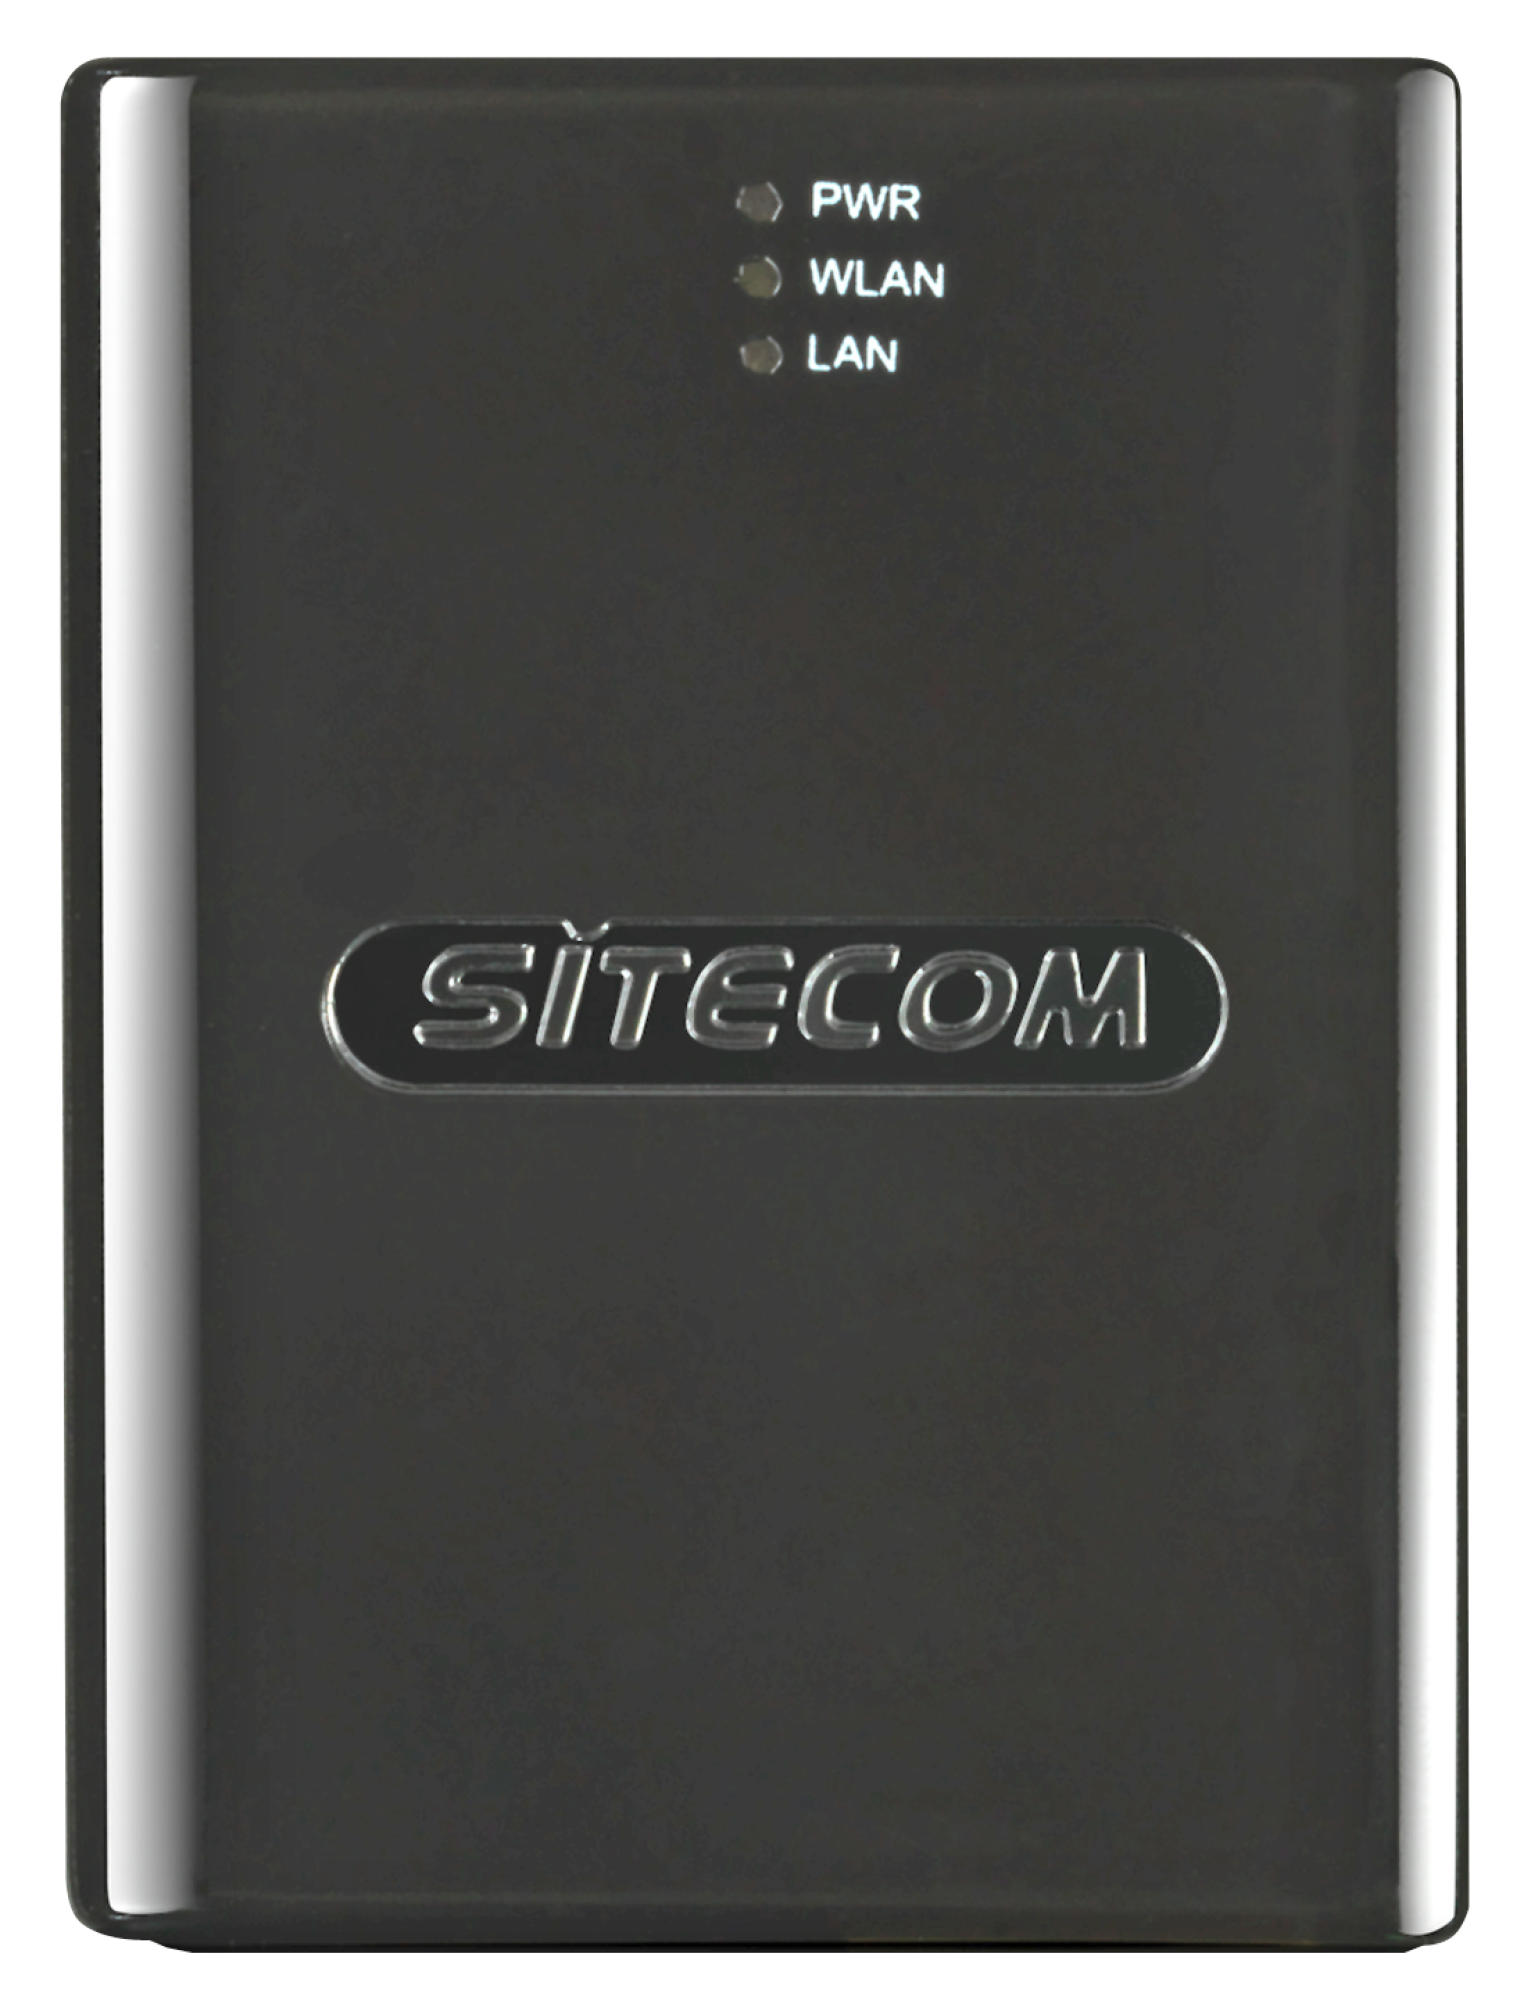 SITECOM Netzwerkdongle Adapter TV WLX2004 Wireless N150